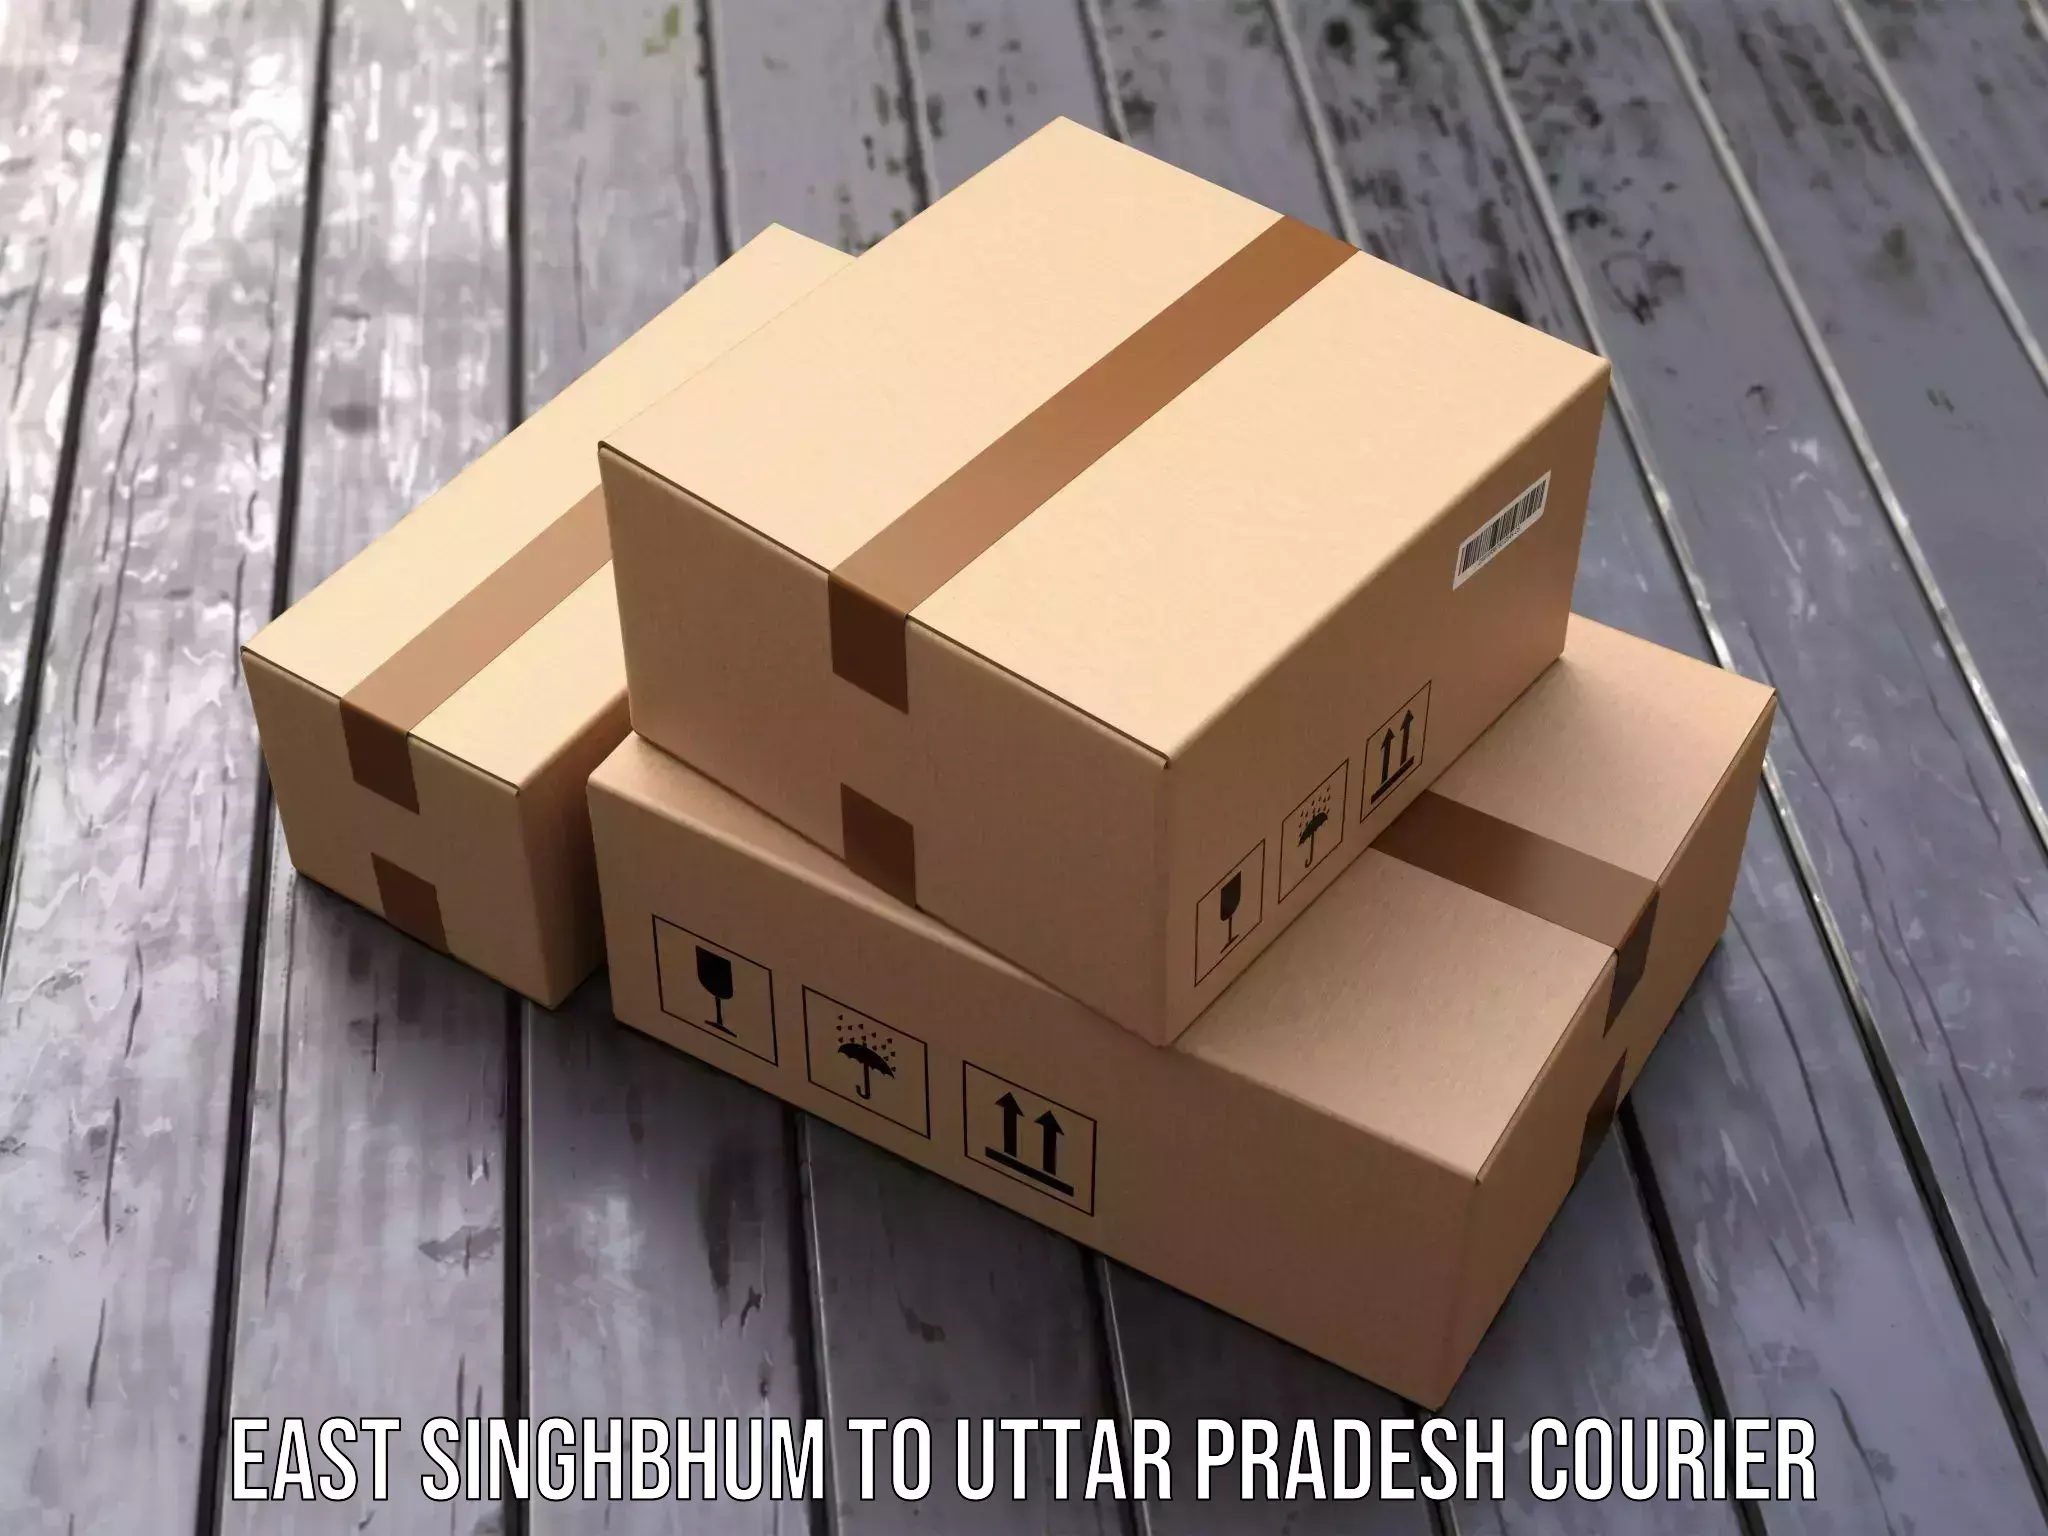 Premium courier services East Singhbhum to Baraut